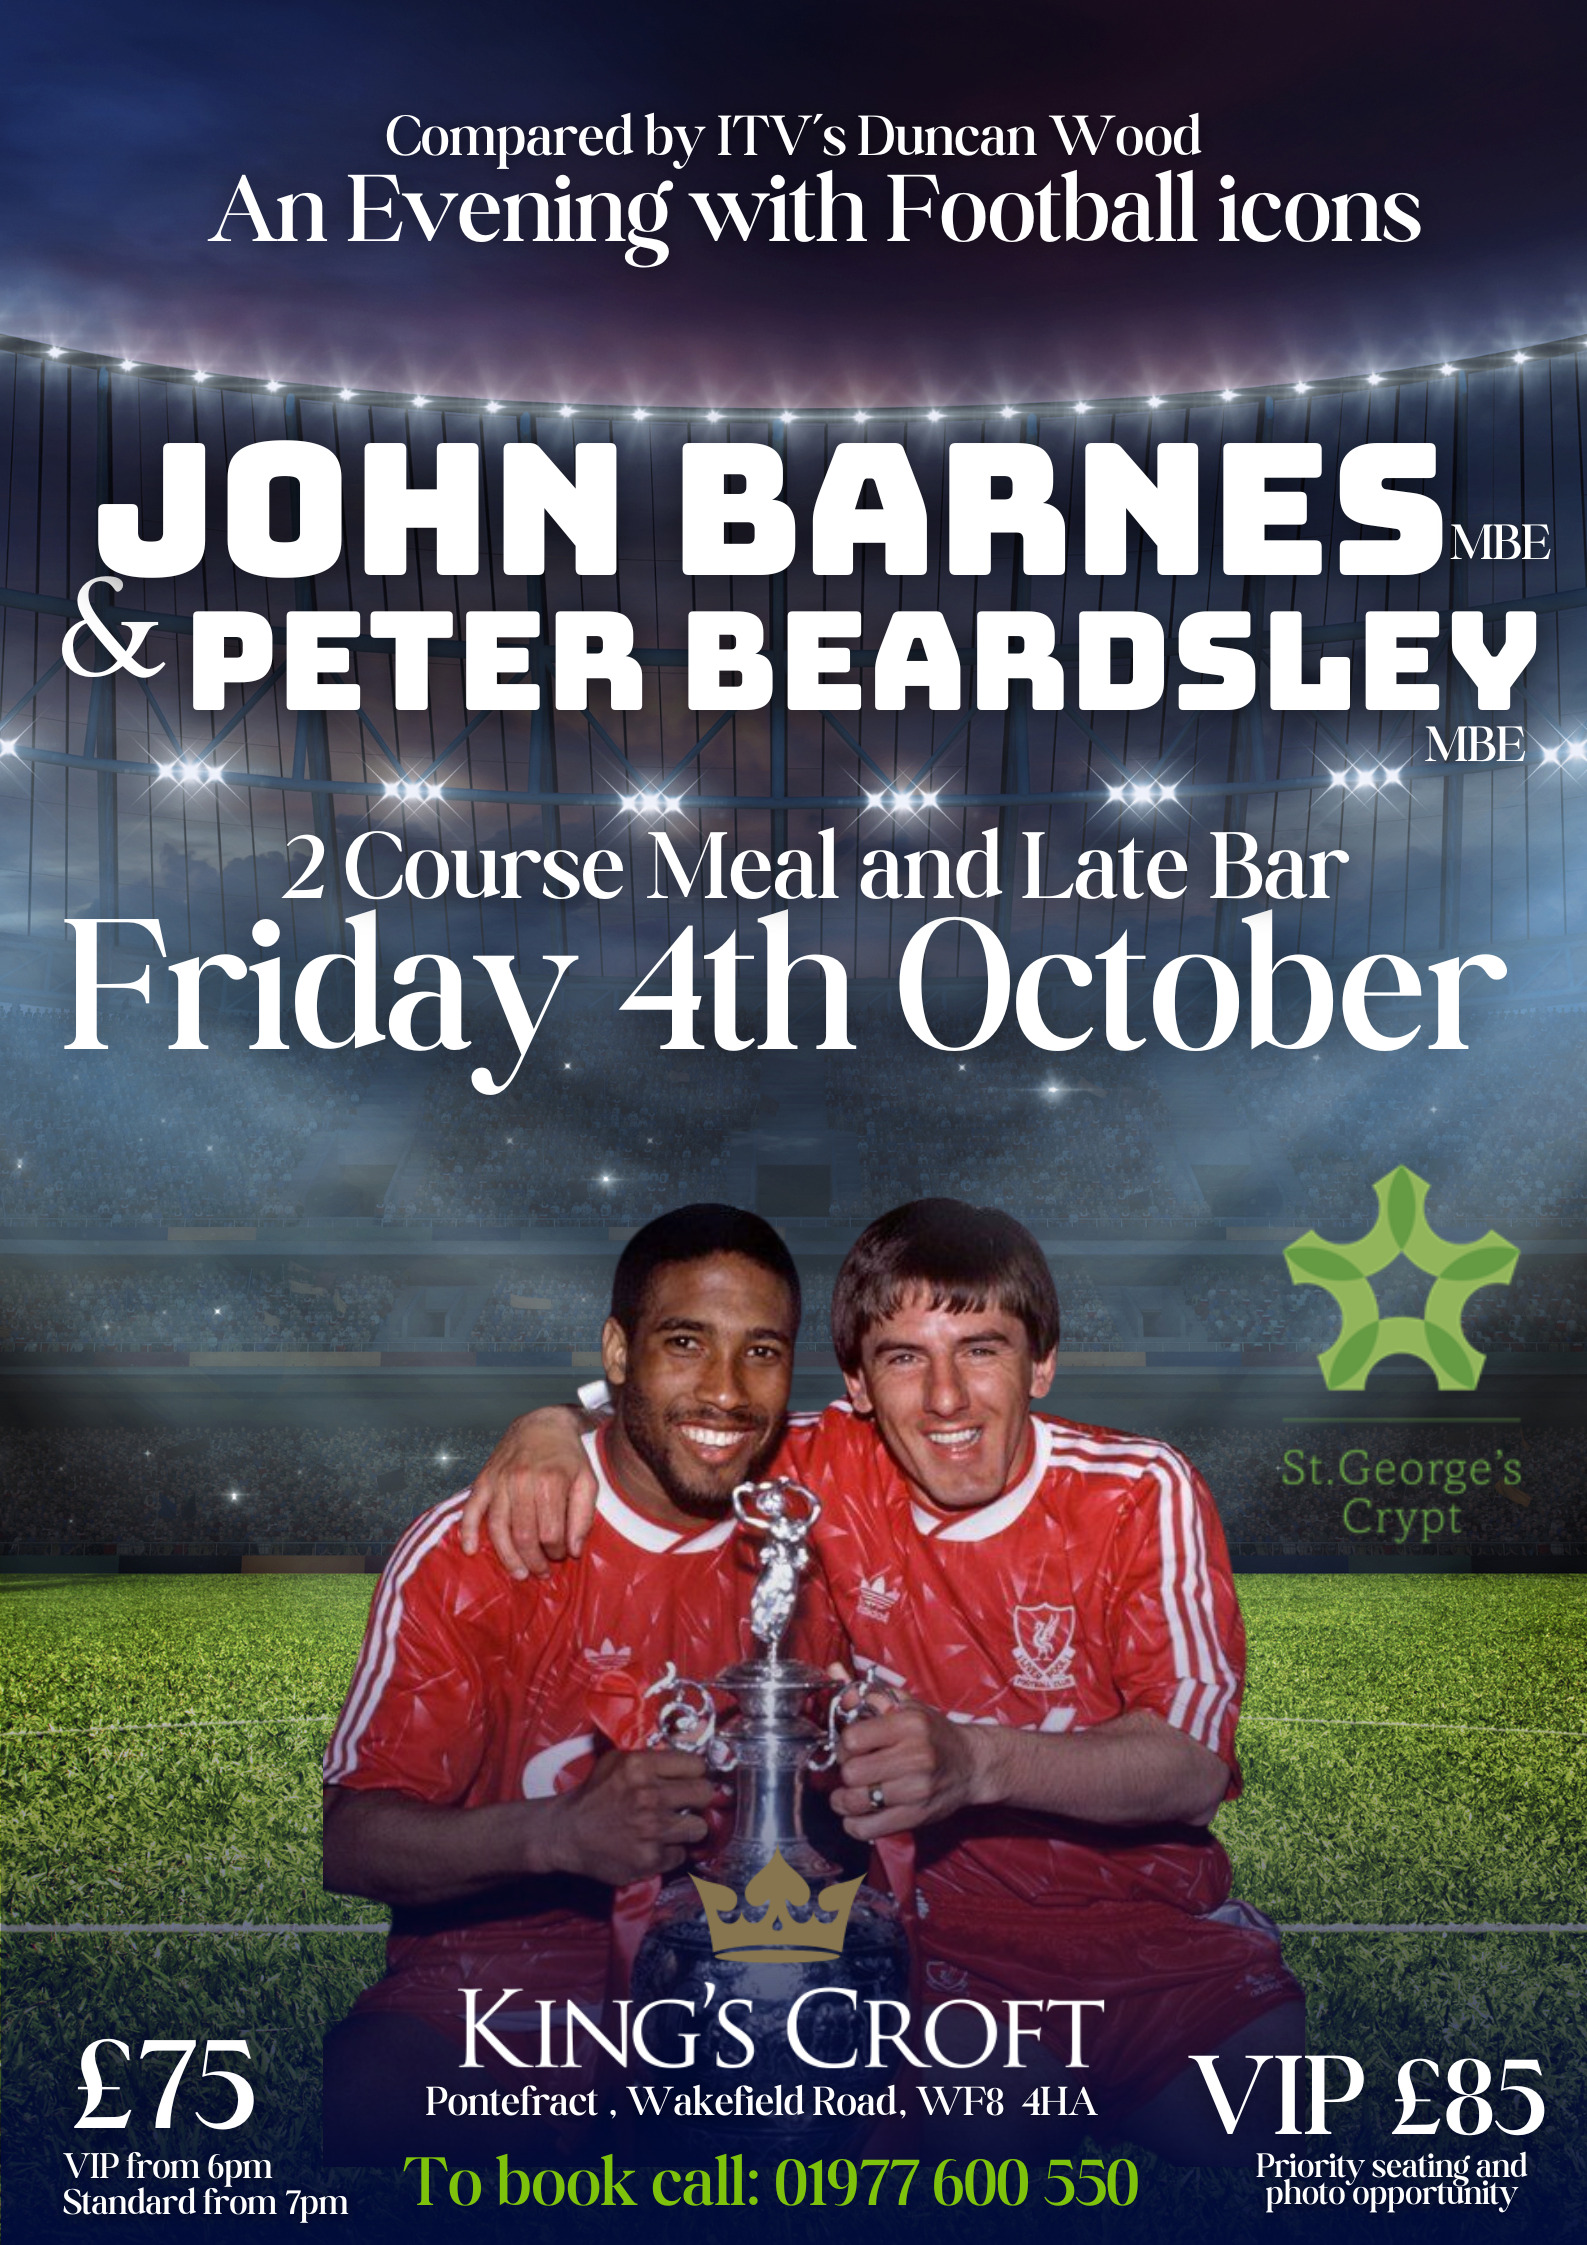 An evening with John Barnes & Peter Beardsley VIP